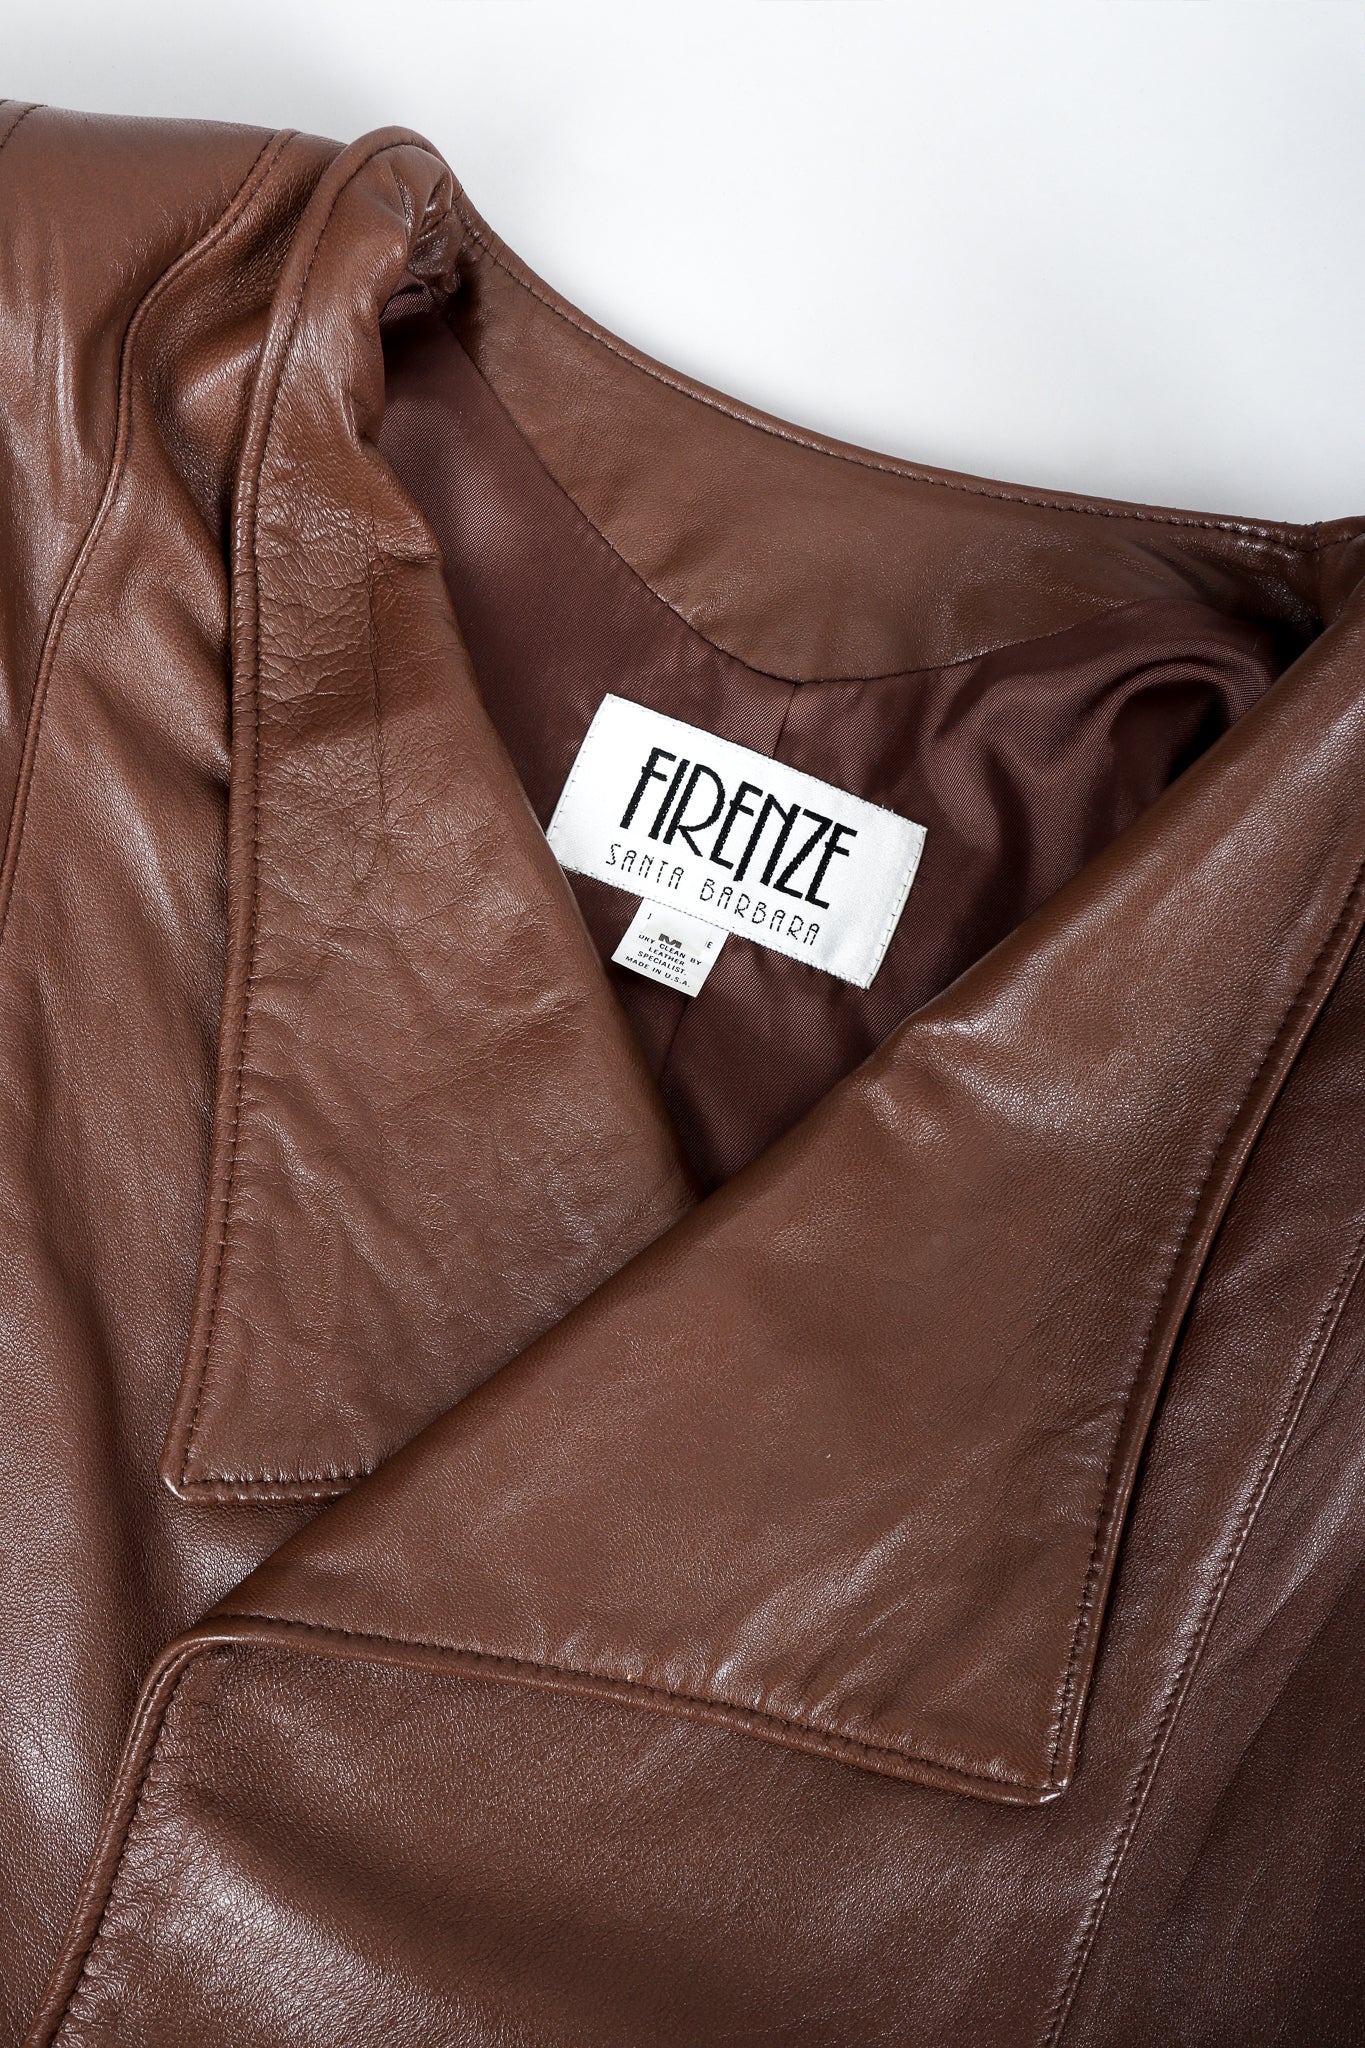 Vintage Firenze Santa Barbara Leather jacket collar